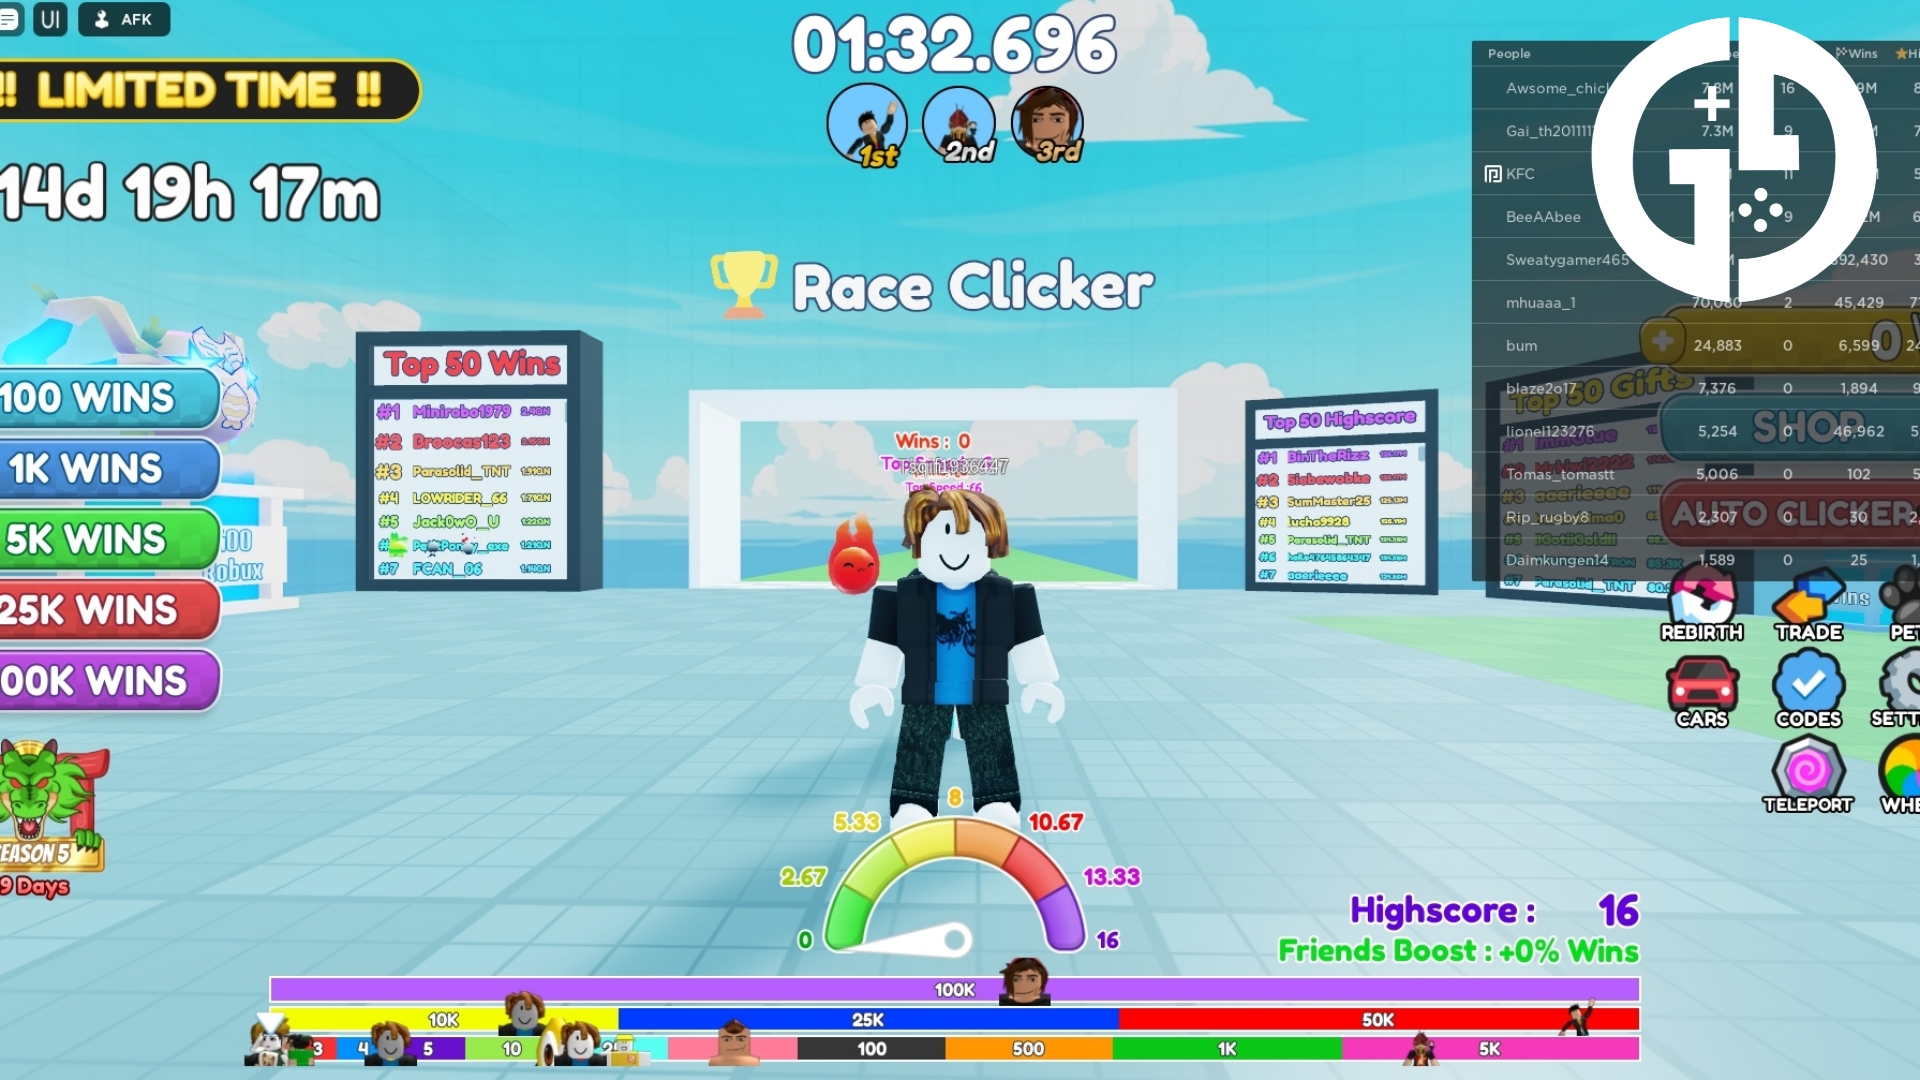 NEW CODES* [UPDATE 1!] Super Hero Clicker Race ROBLOX